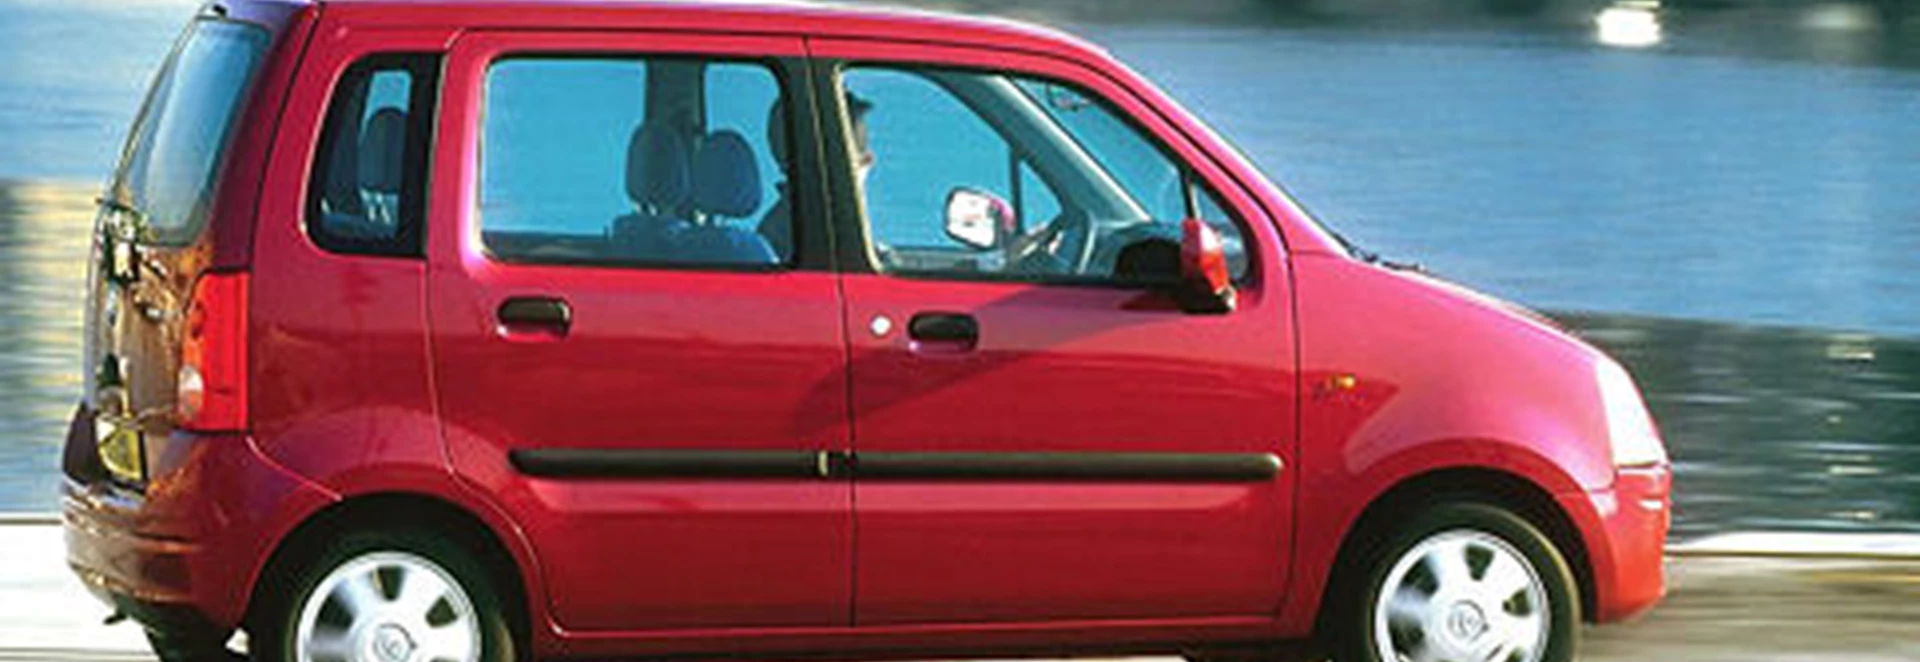 Vauxhall Agila 1.2 (2000) 